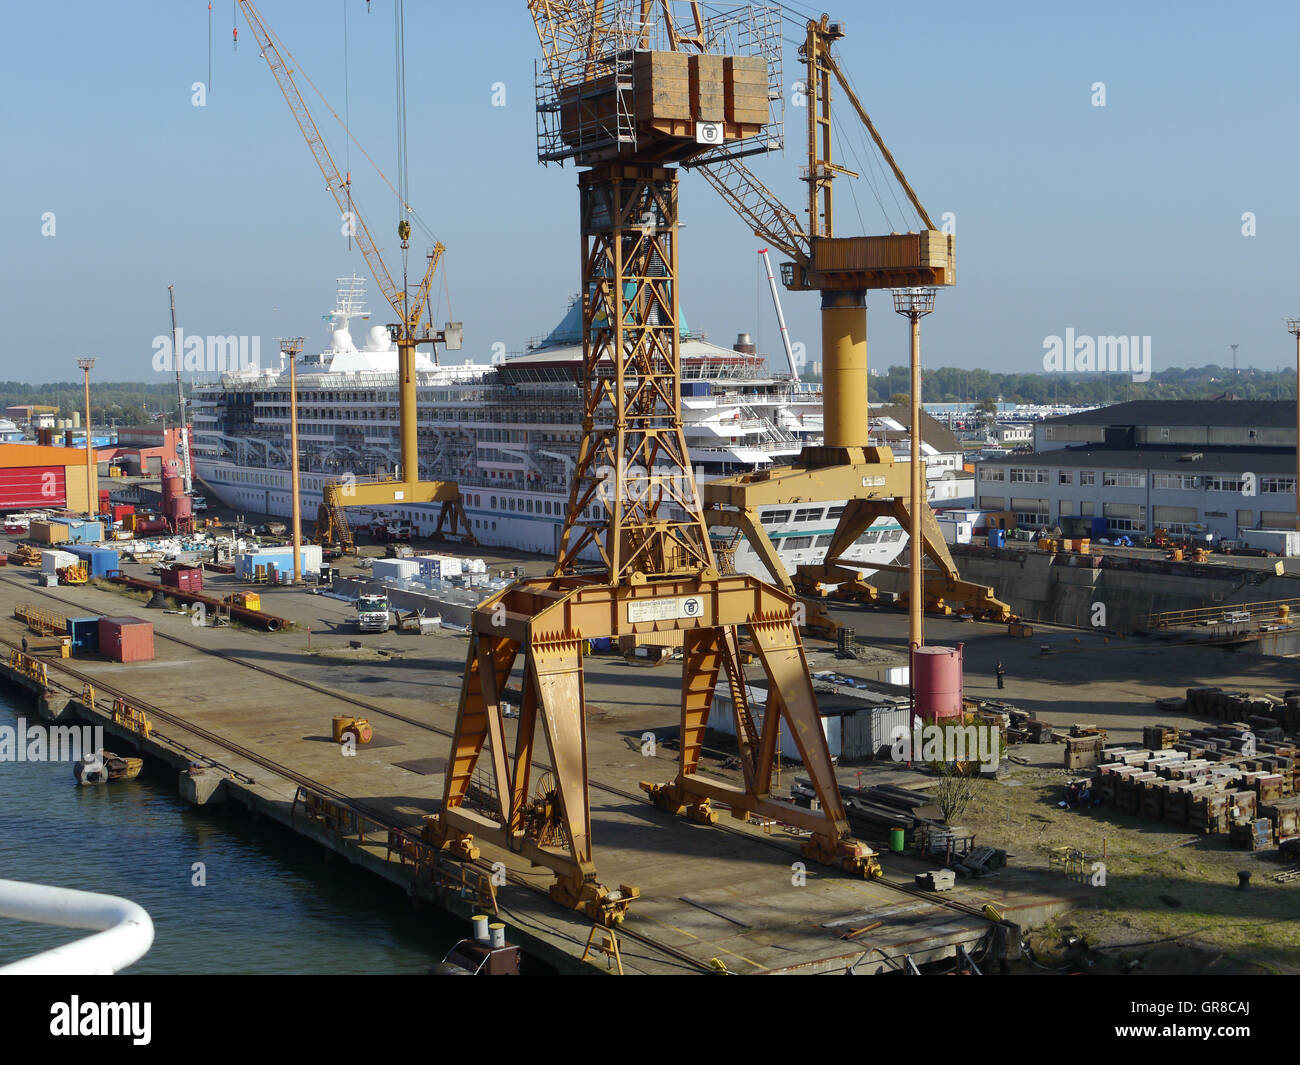 Shipyard With Cruiseliner Artania Stock Photo